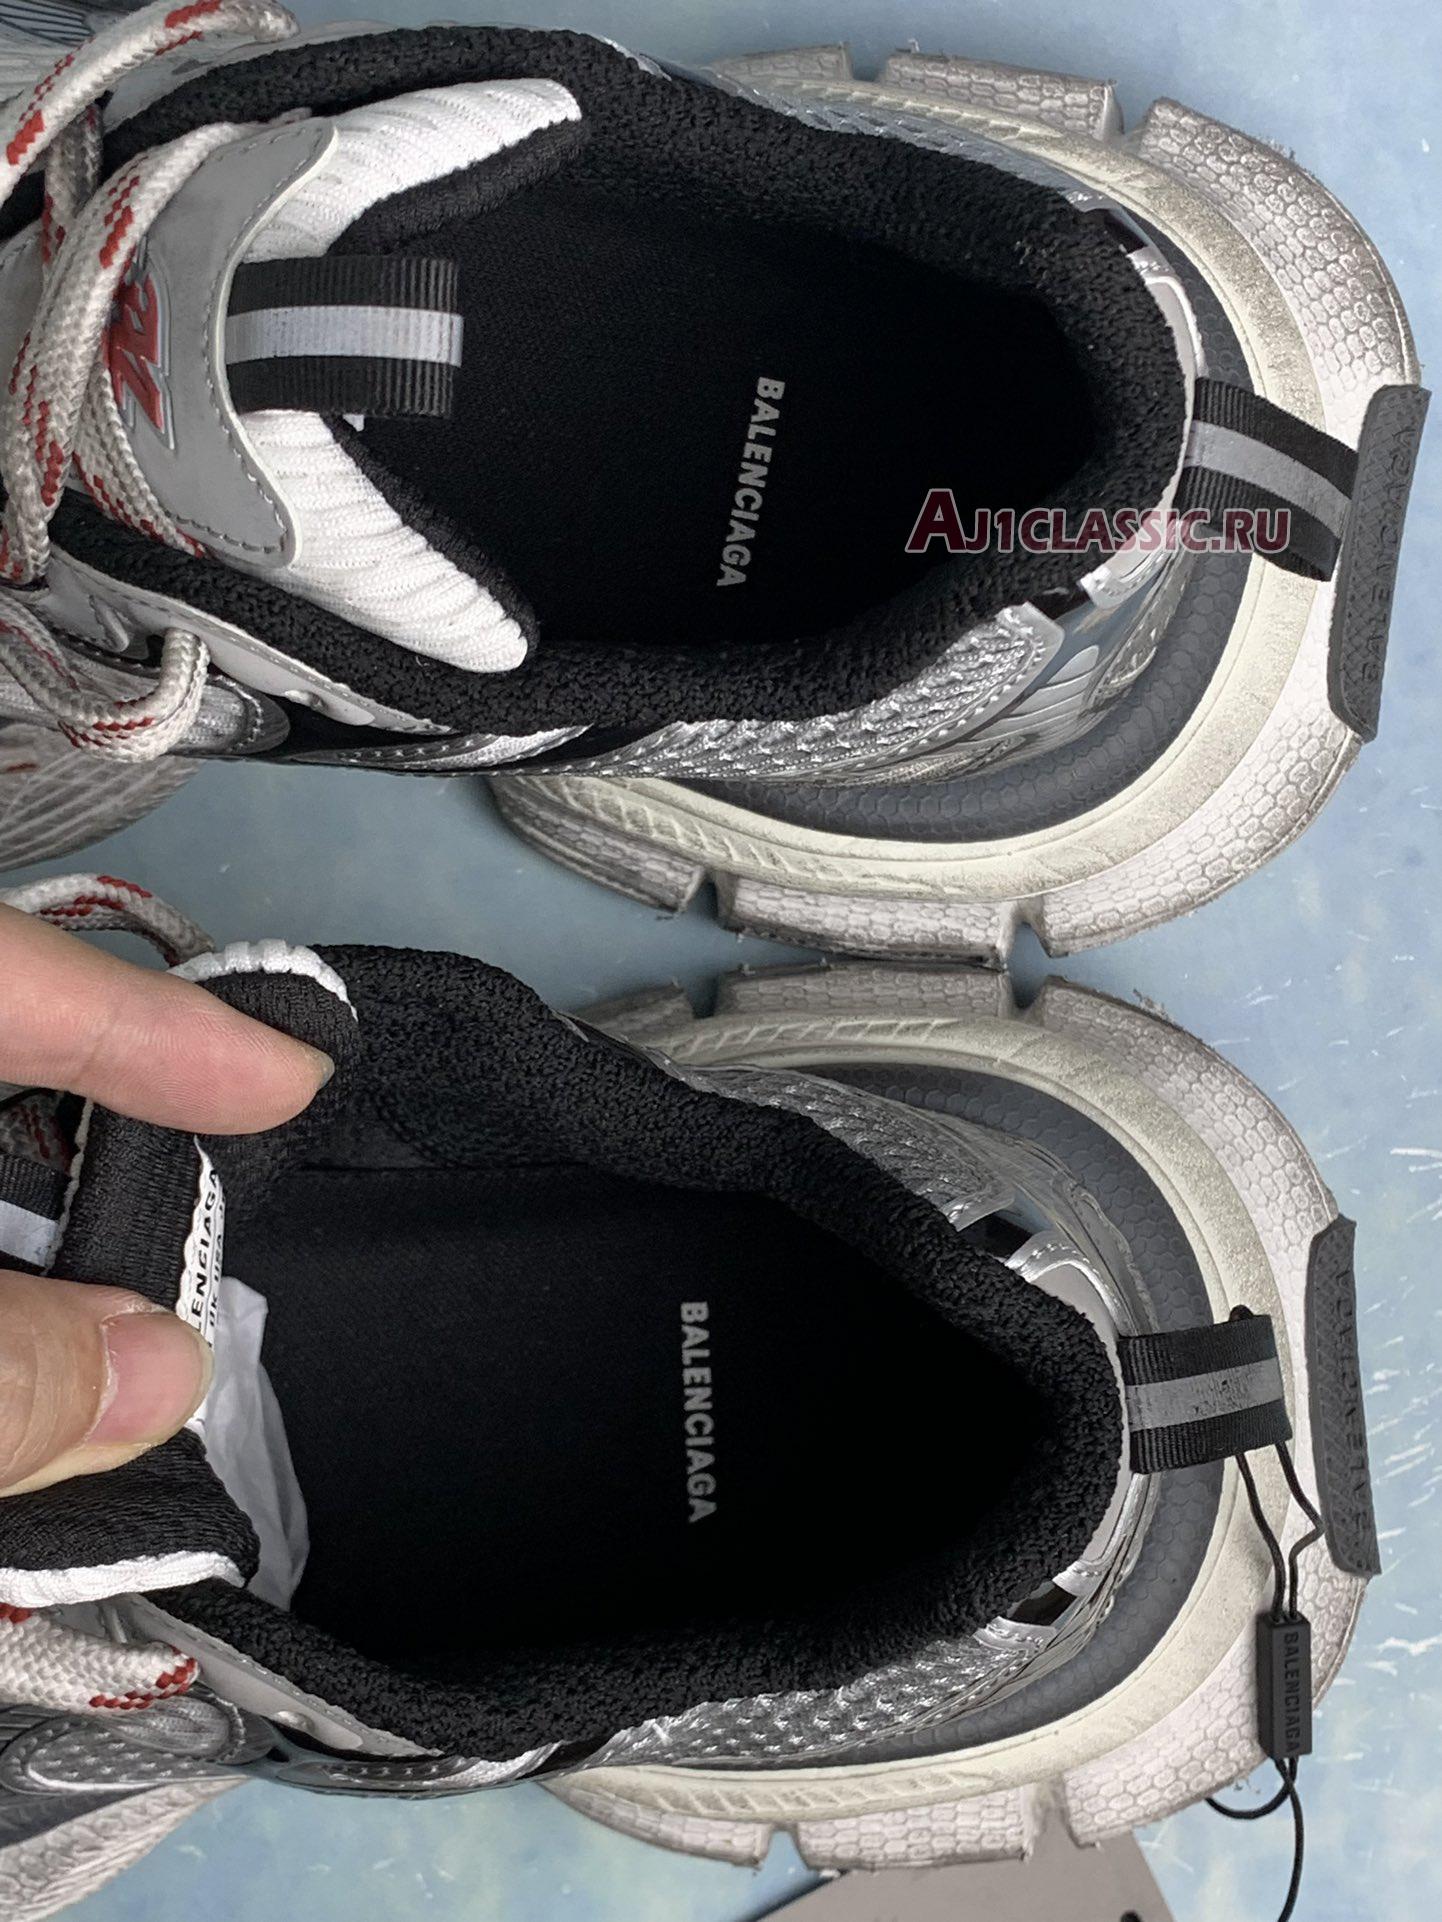 Balenciaga 3XL Sneaker "Grey White Red" 734734 W3XL5 1219